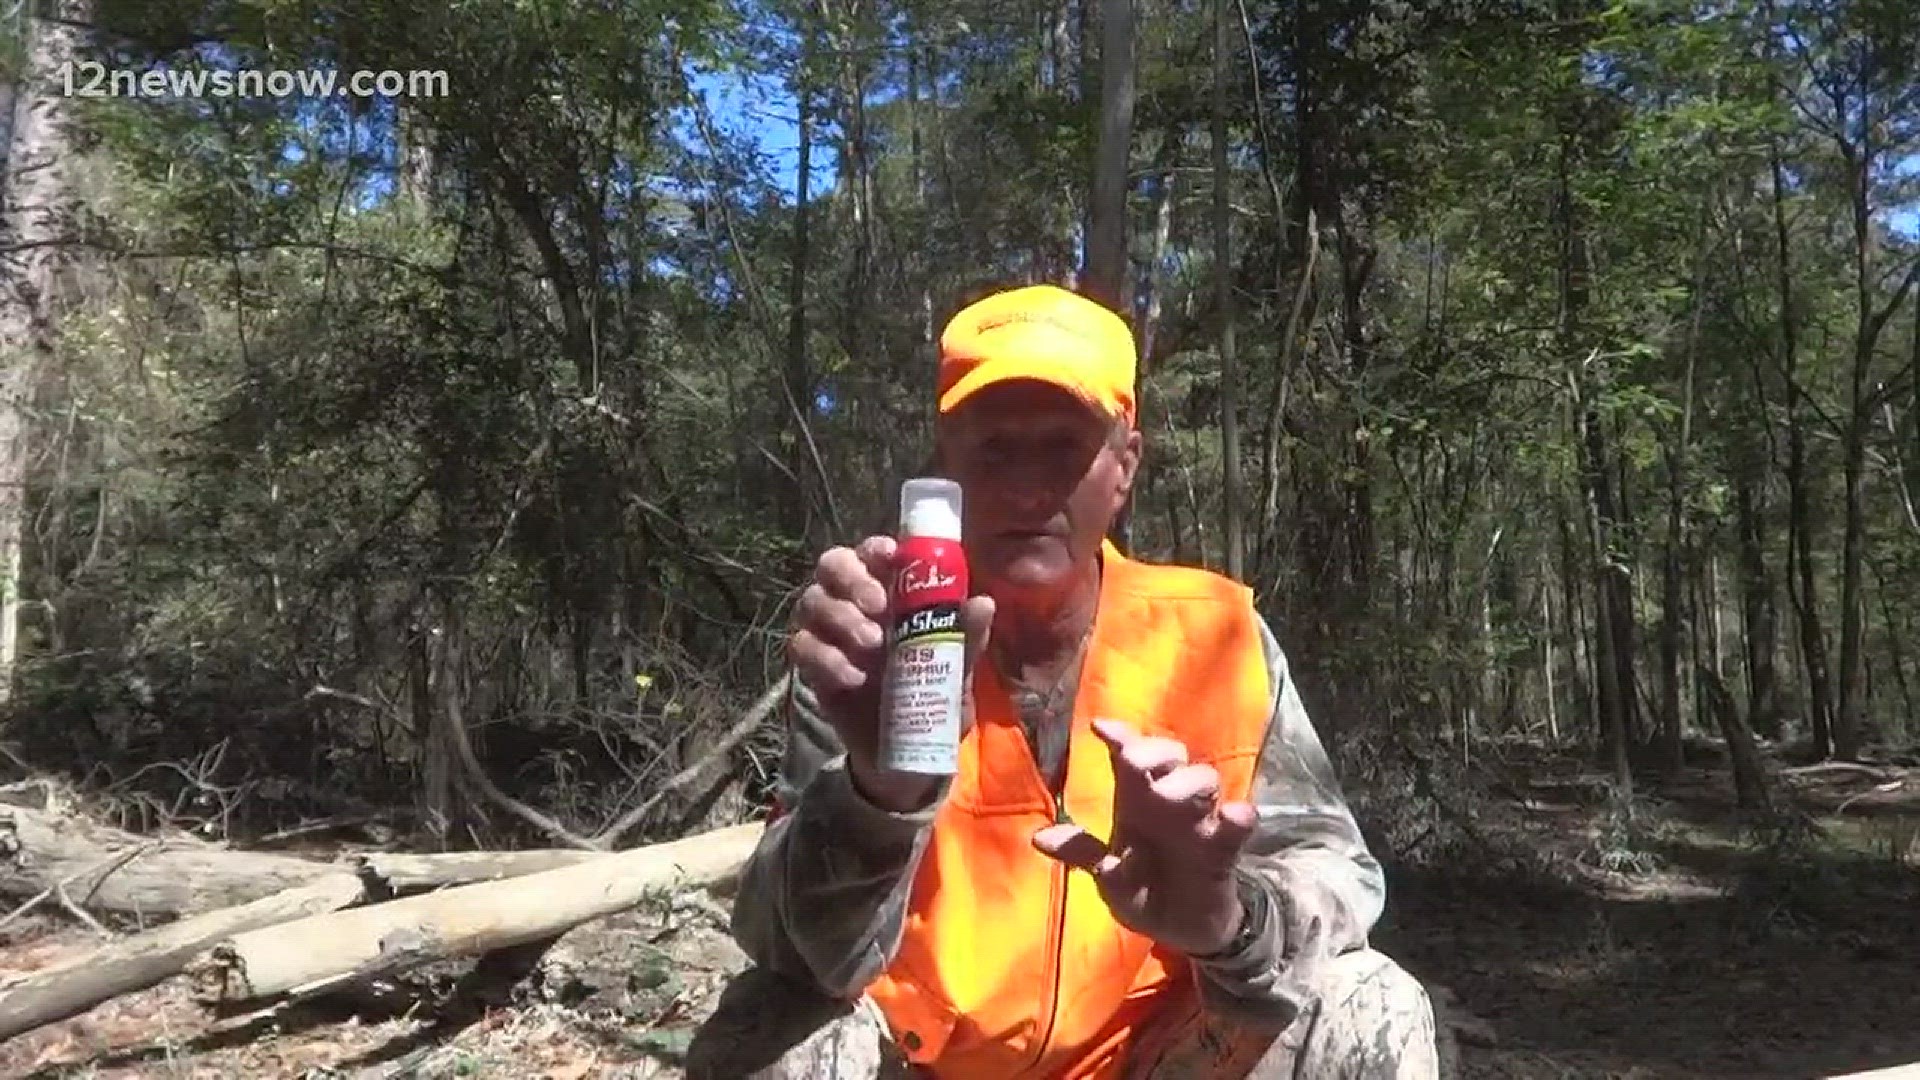 Buck scent that has been around for years, has no problem attracting deer.